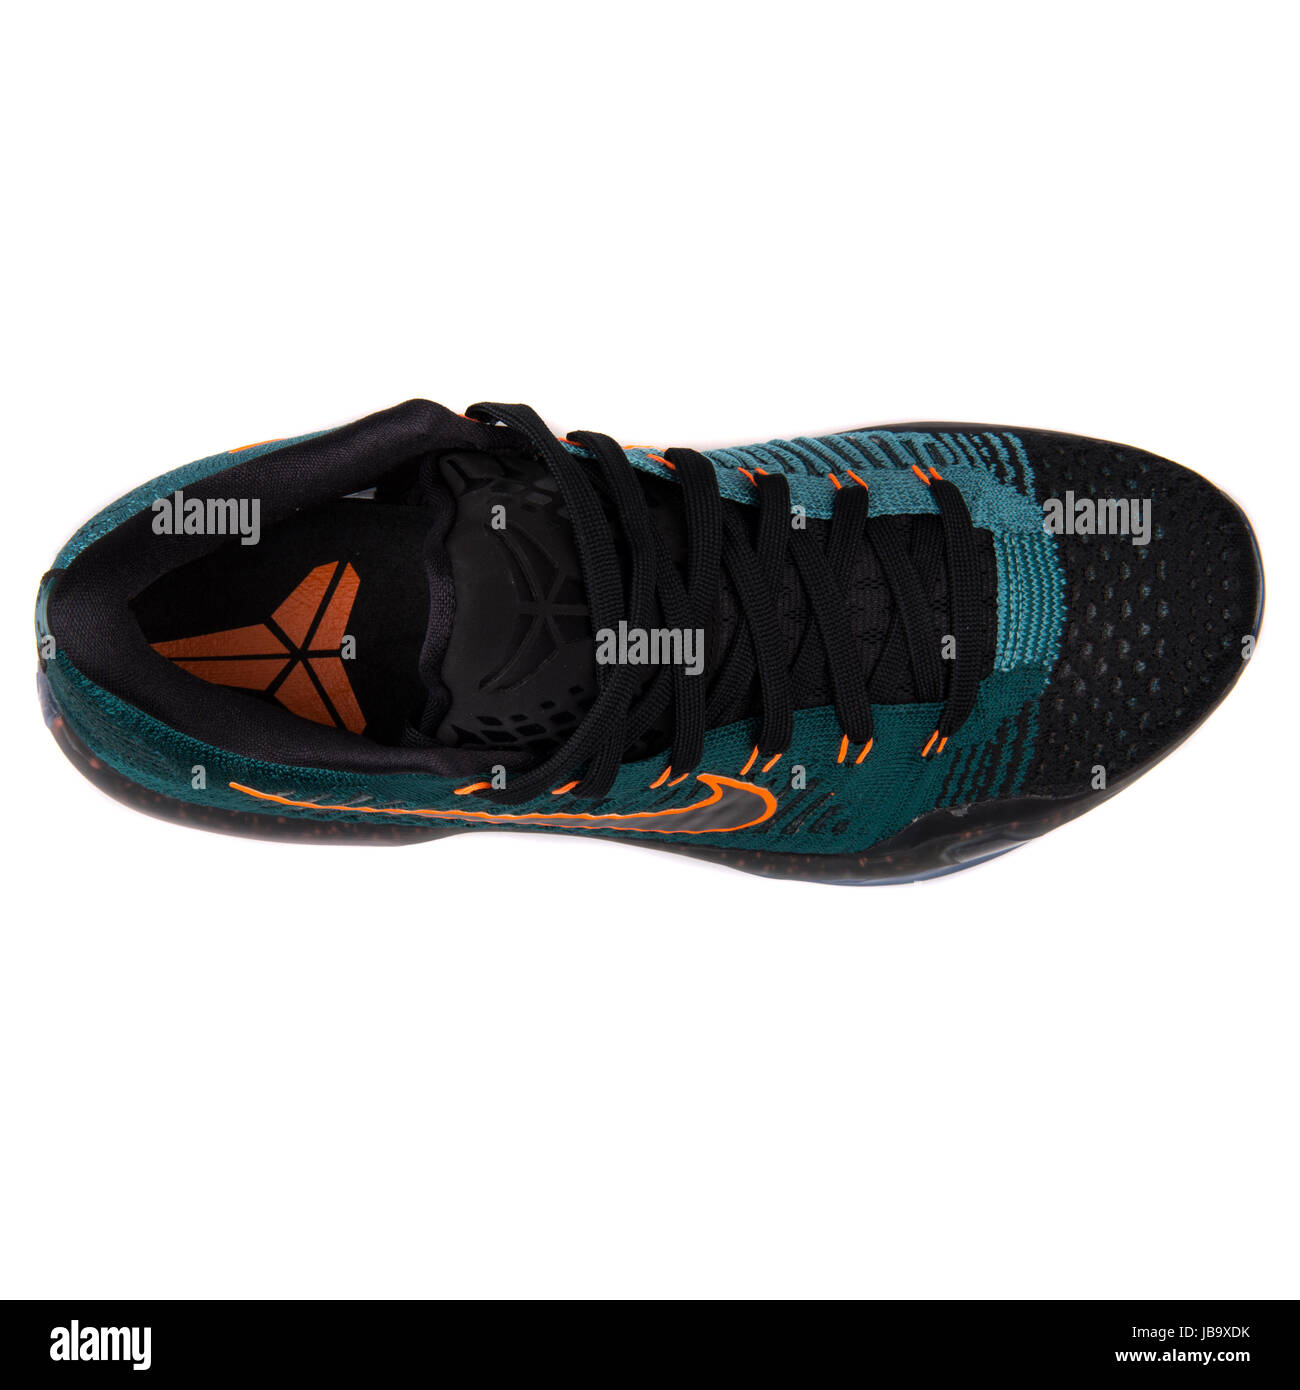 Nike Kobe X Elite Low Black, Dark Green and Orange Men's Basketball Shoes -  747212-303 Stock Photo - Alamy